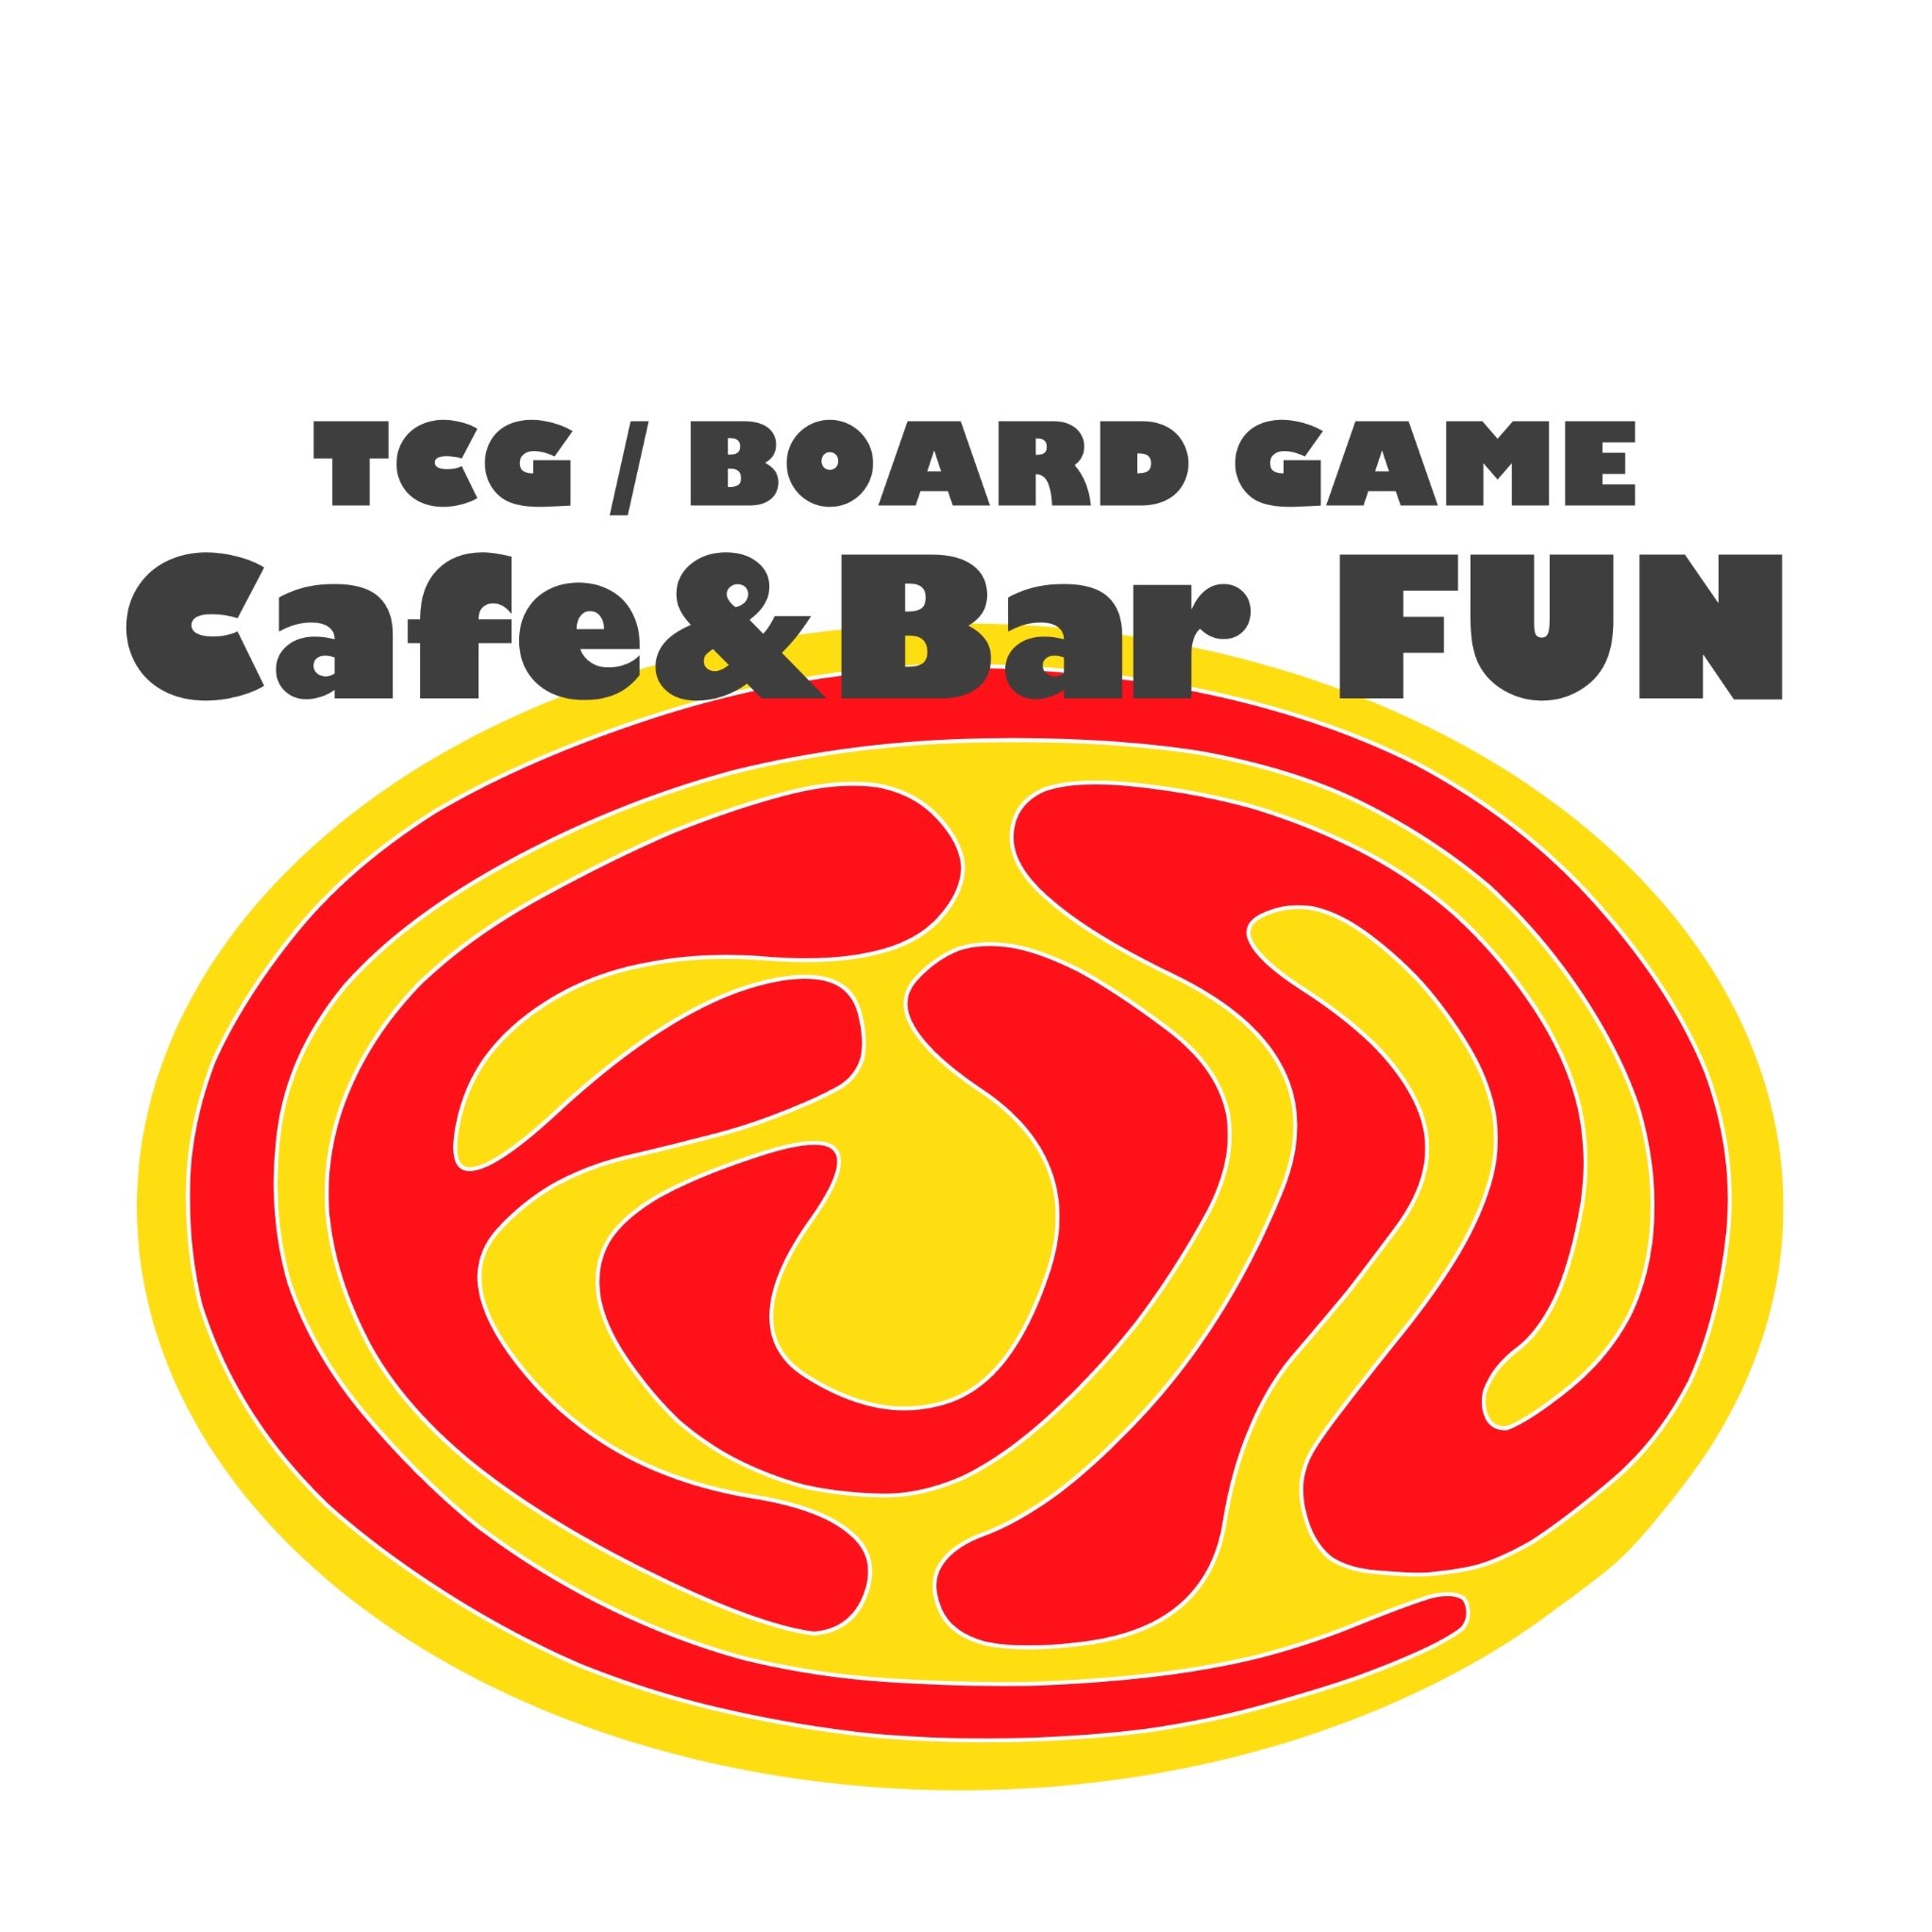 Cafe&Bar FUN☆TCG/BOARD GAME